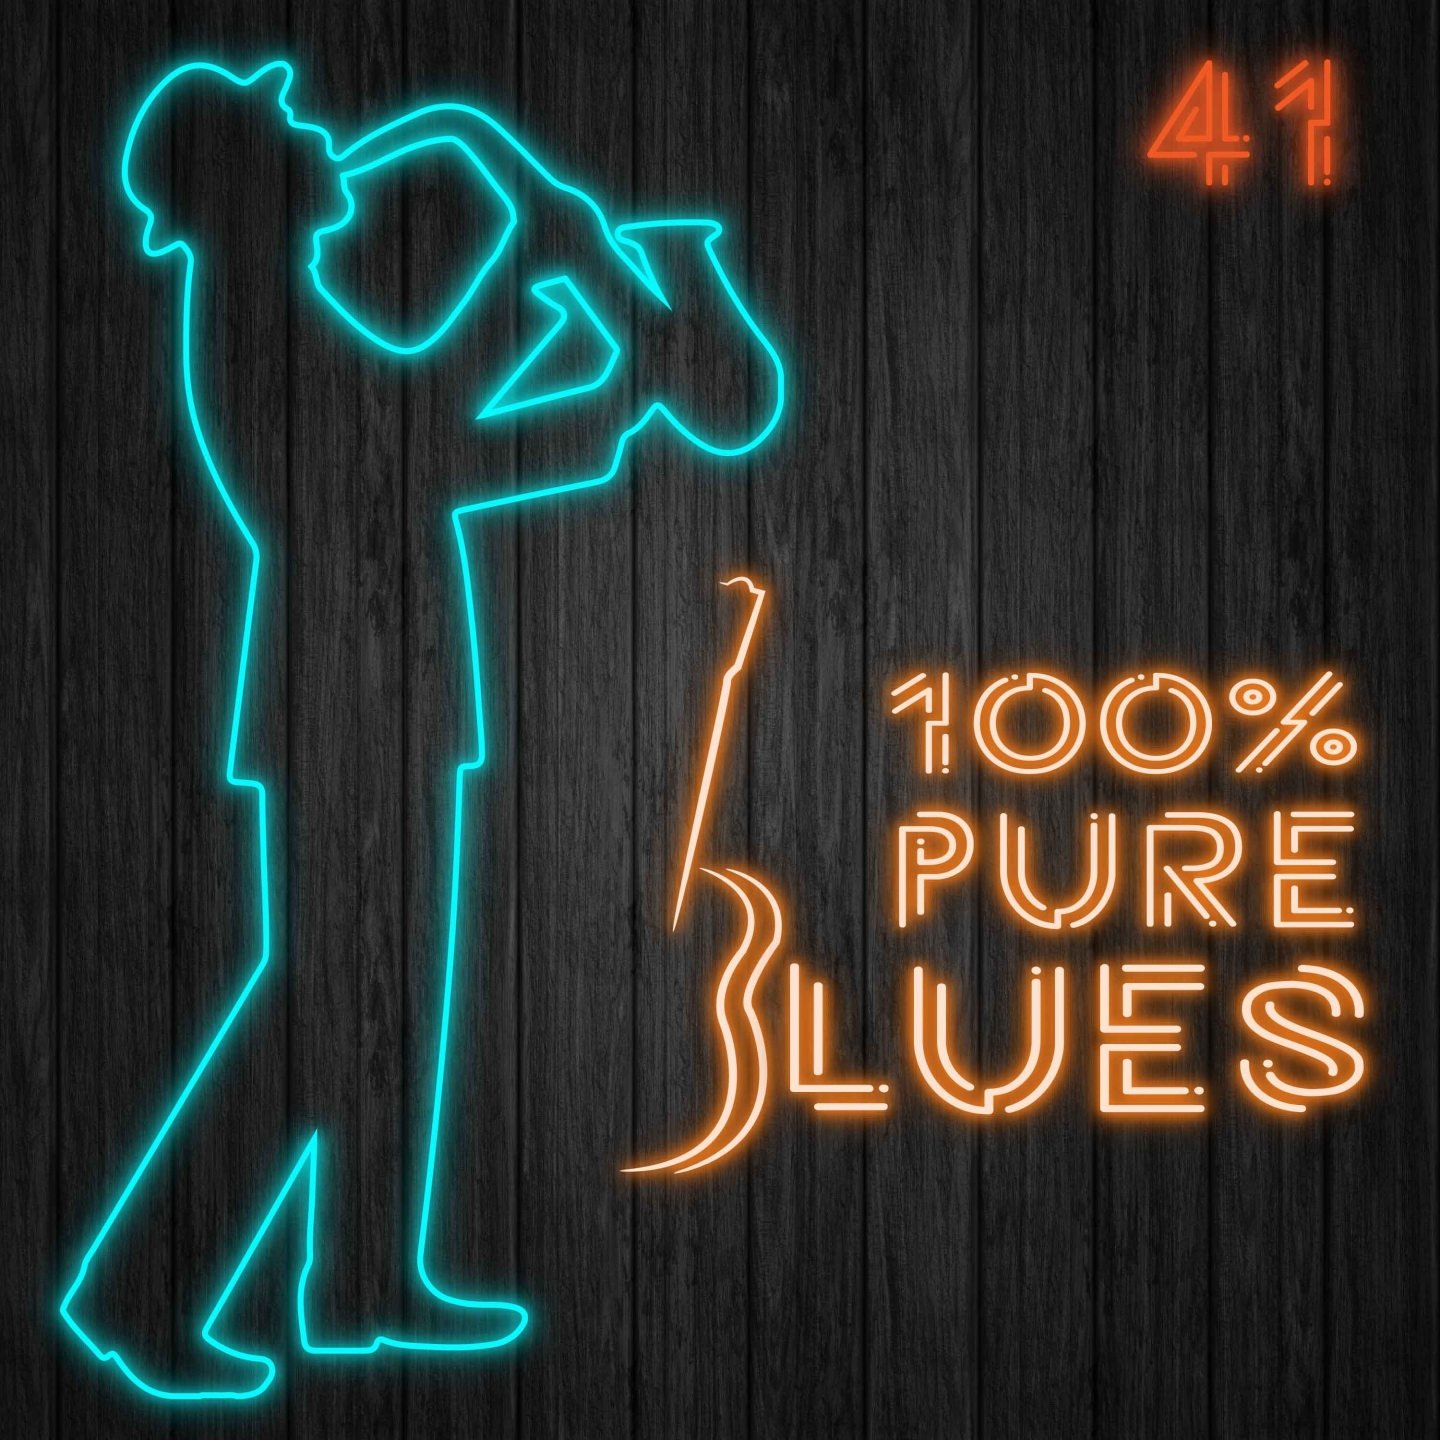 100% Pure Blues / 41